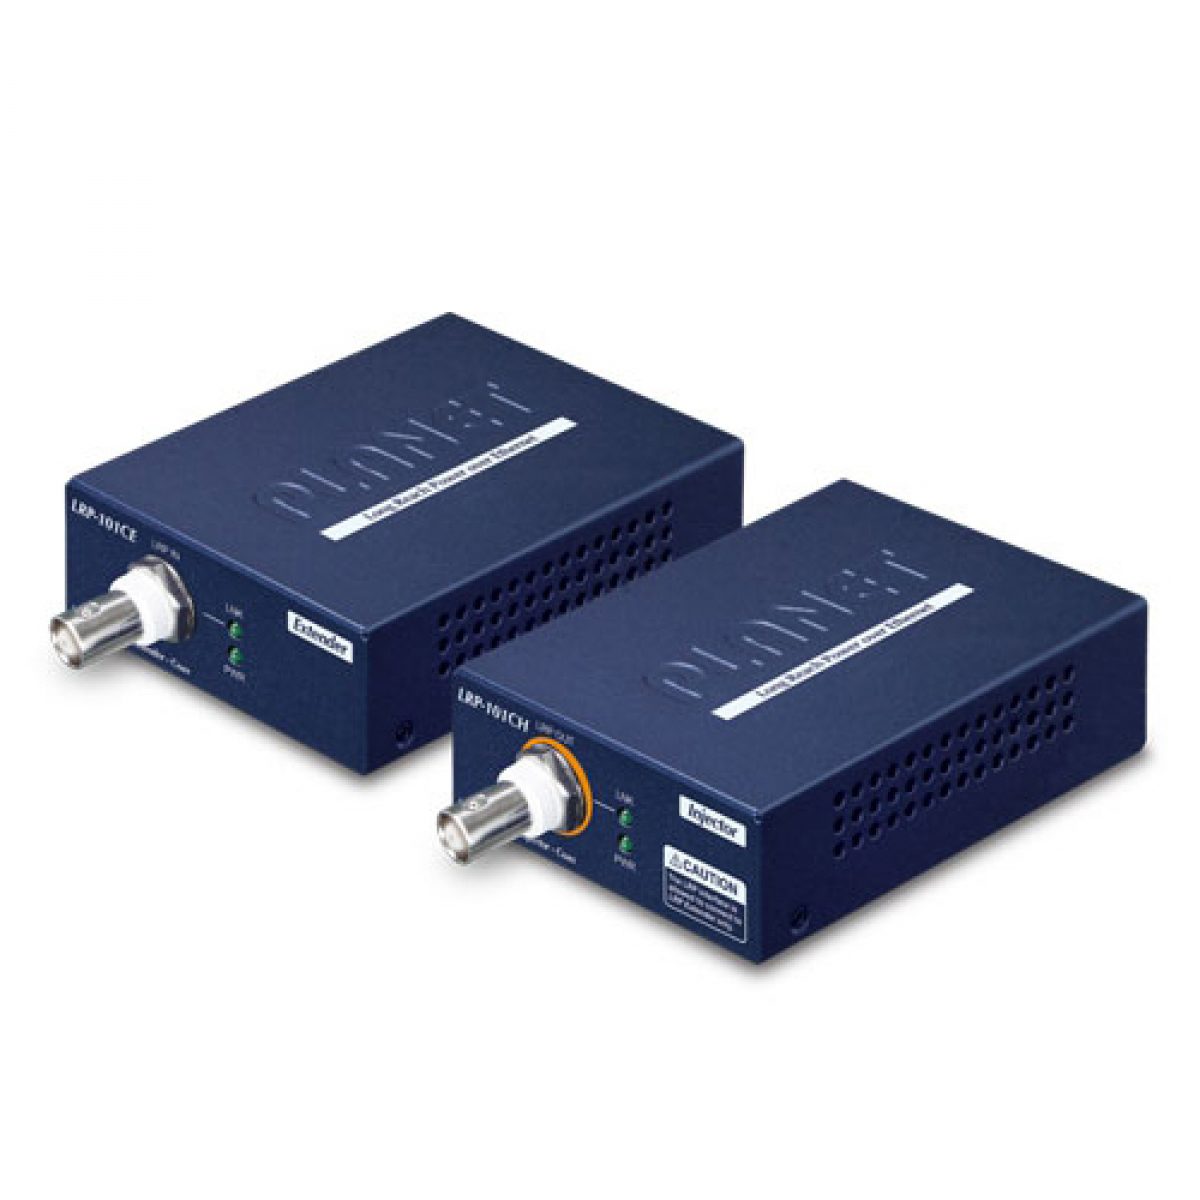 POE-1200G 12-Port Gigabit IEEE 802.3at PoE+ Managed Injector Hub (220  watts) - Planet Technology USA